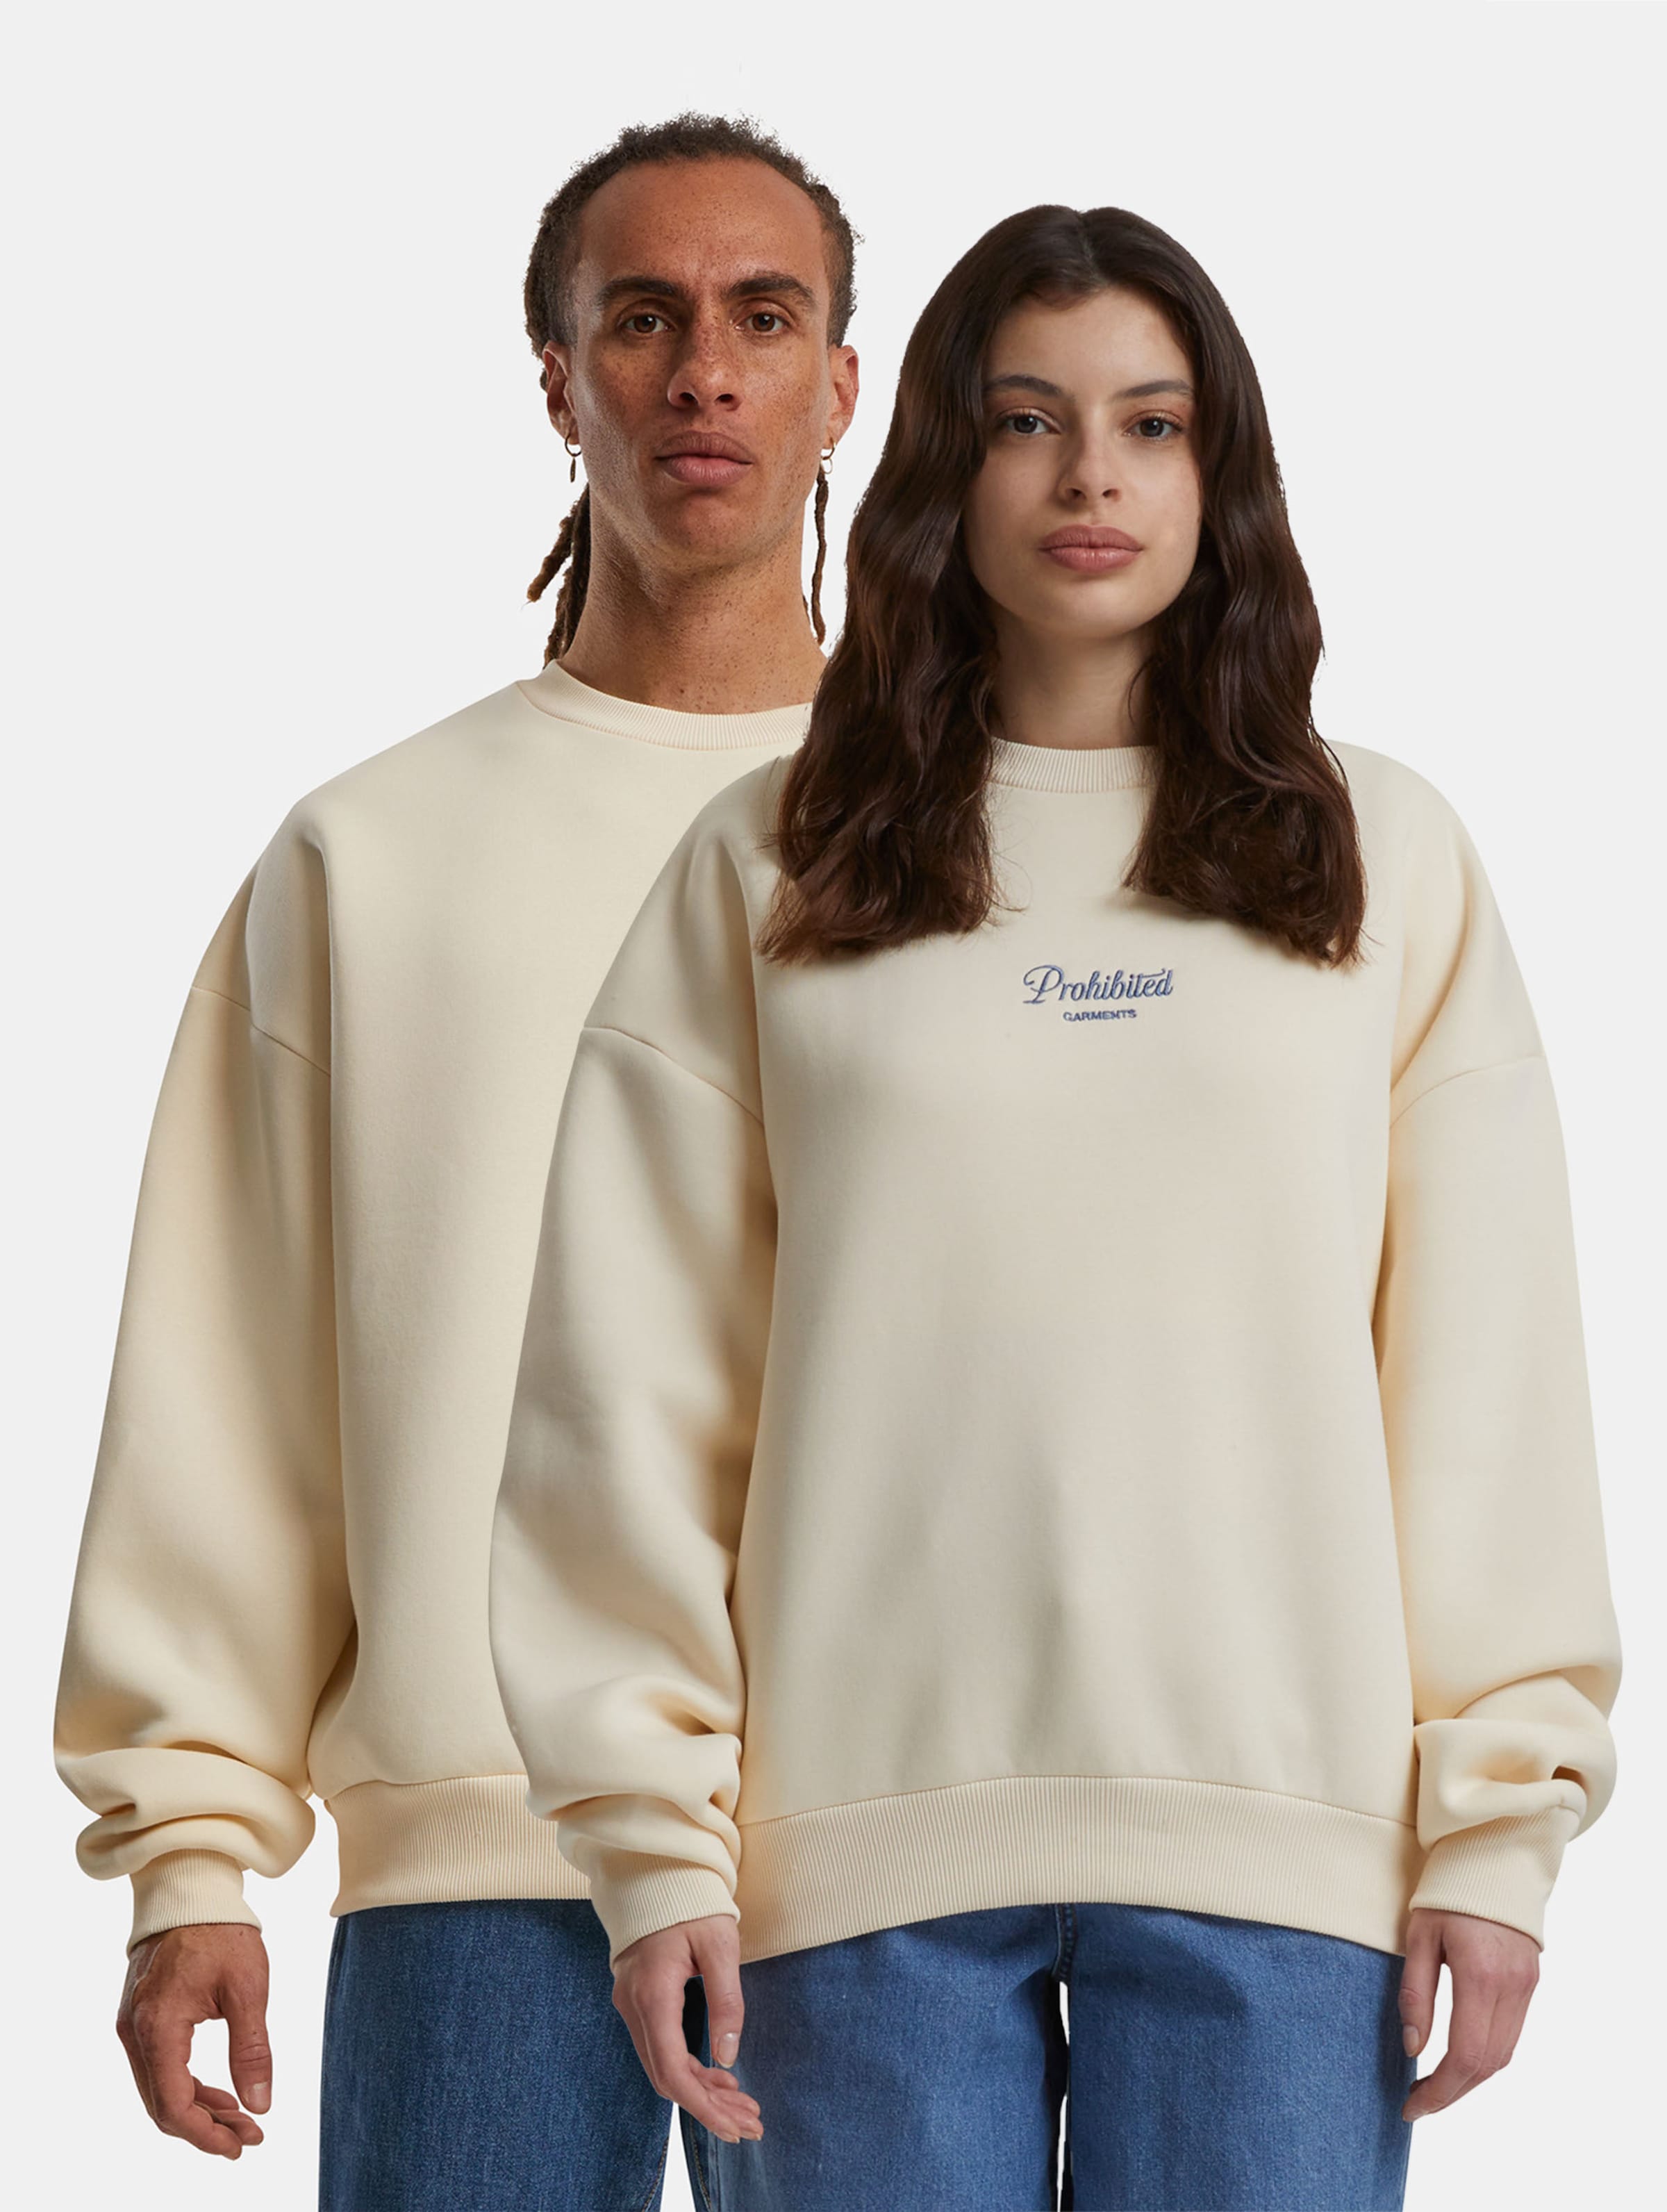 Prohibited PB Garment Crew Neck Pullover Frauen,Männer,Unisex op kleur beige, Maat M